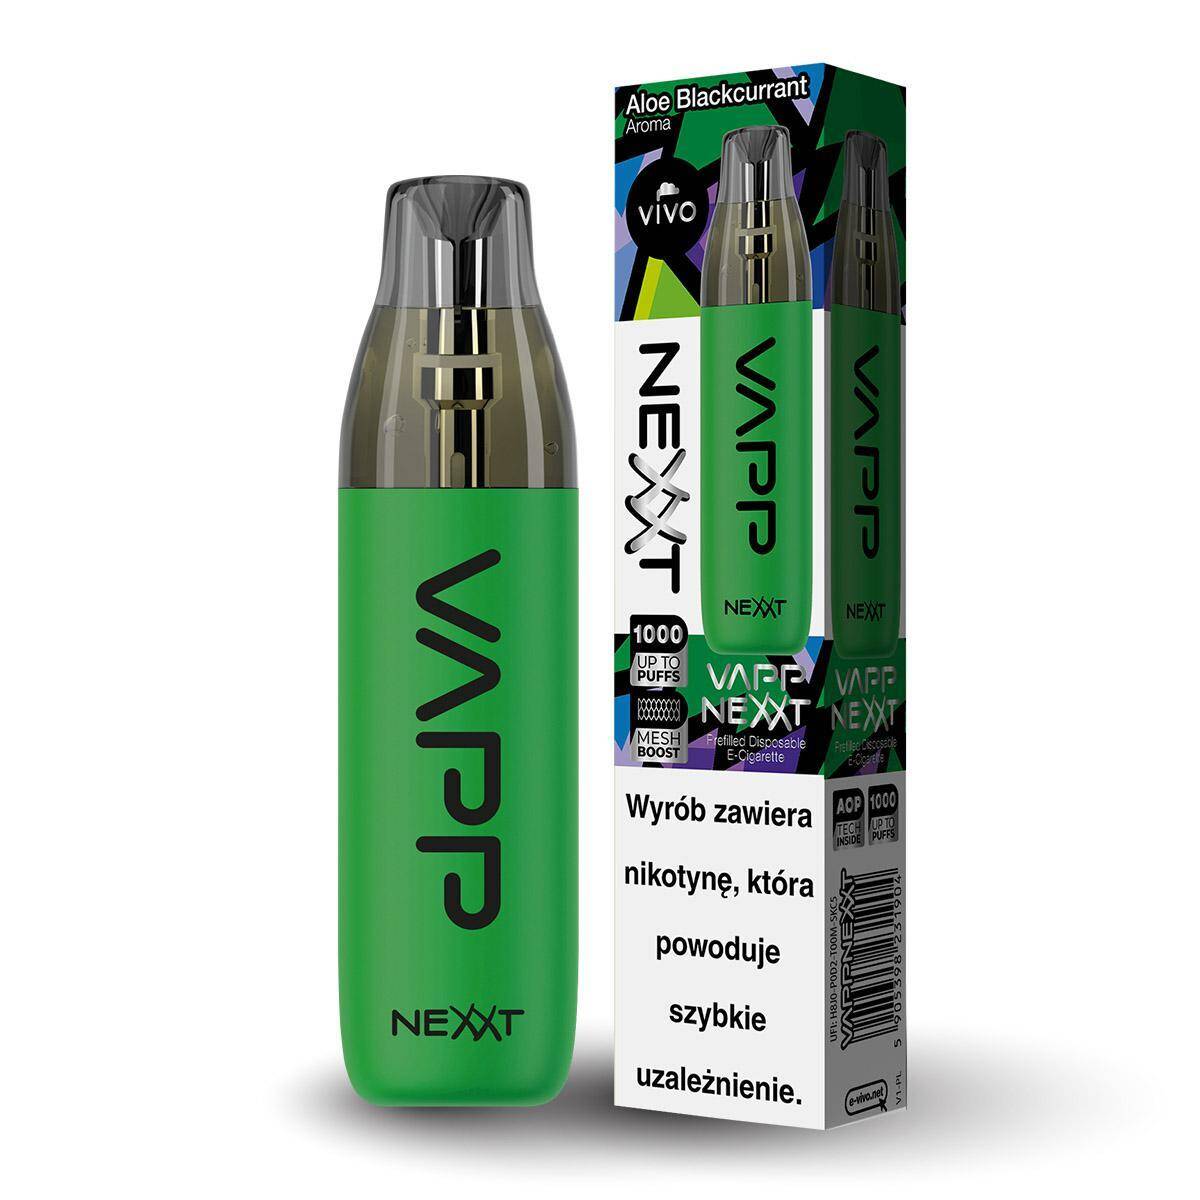 E-papieros VIVO Nexxt - Aloe Blackcurrant 20mg